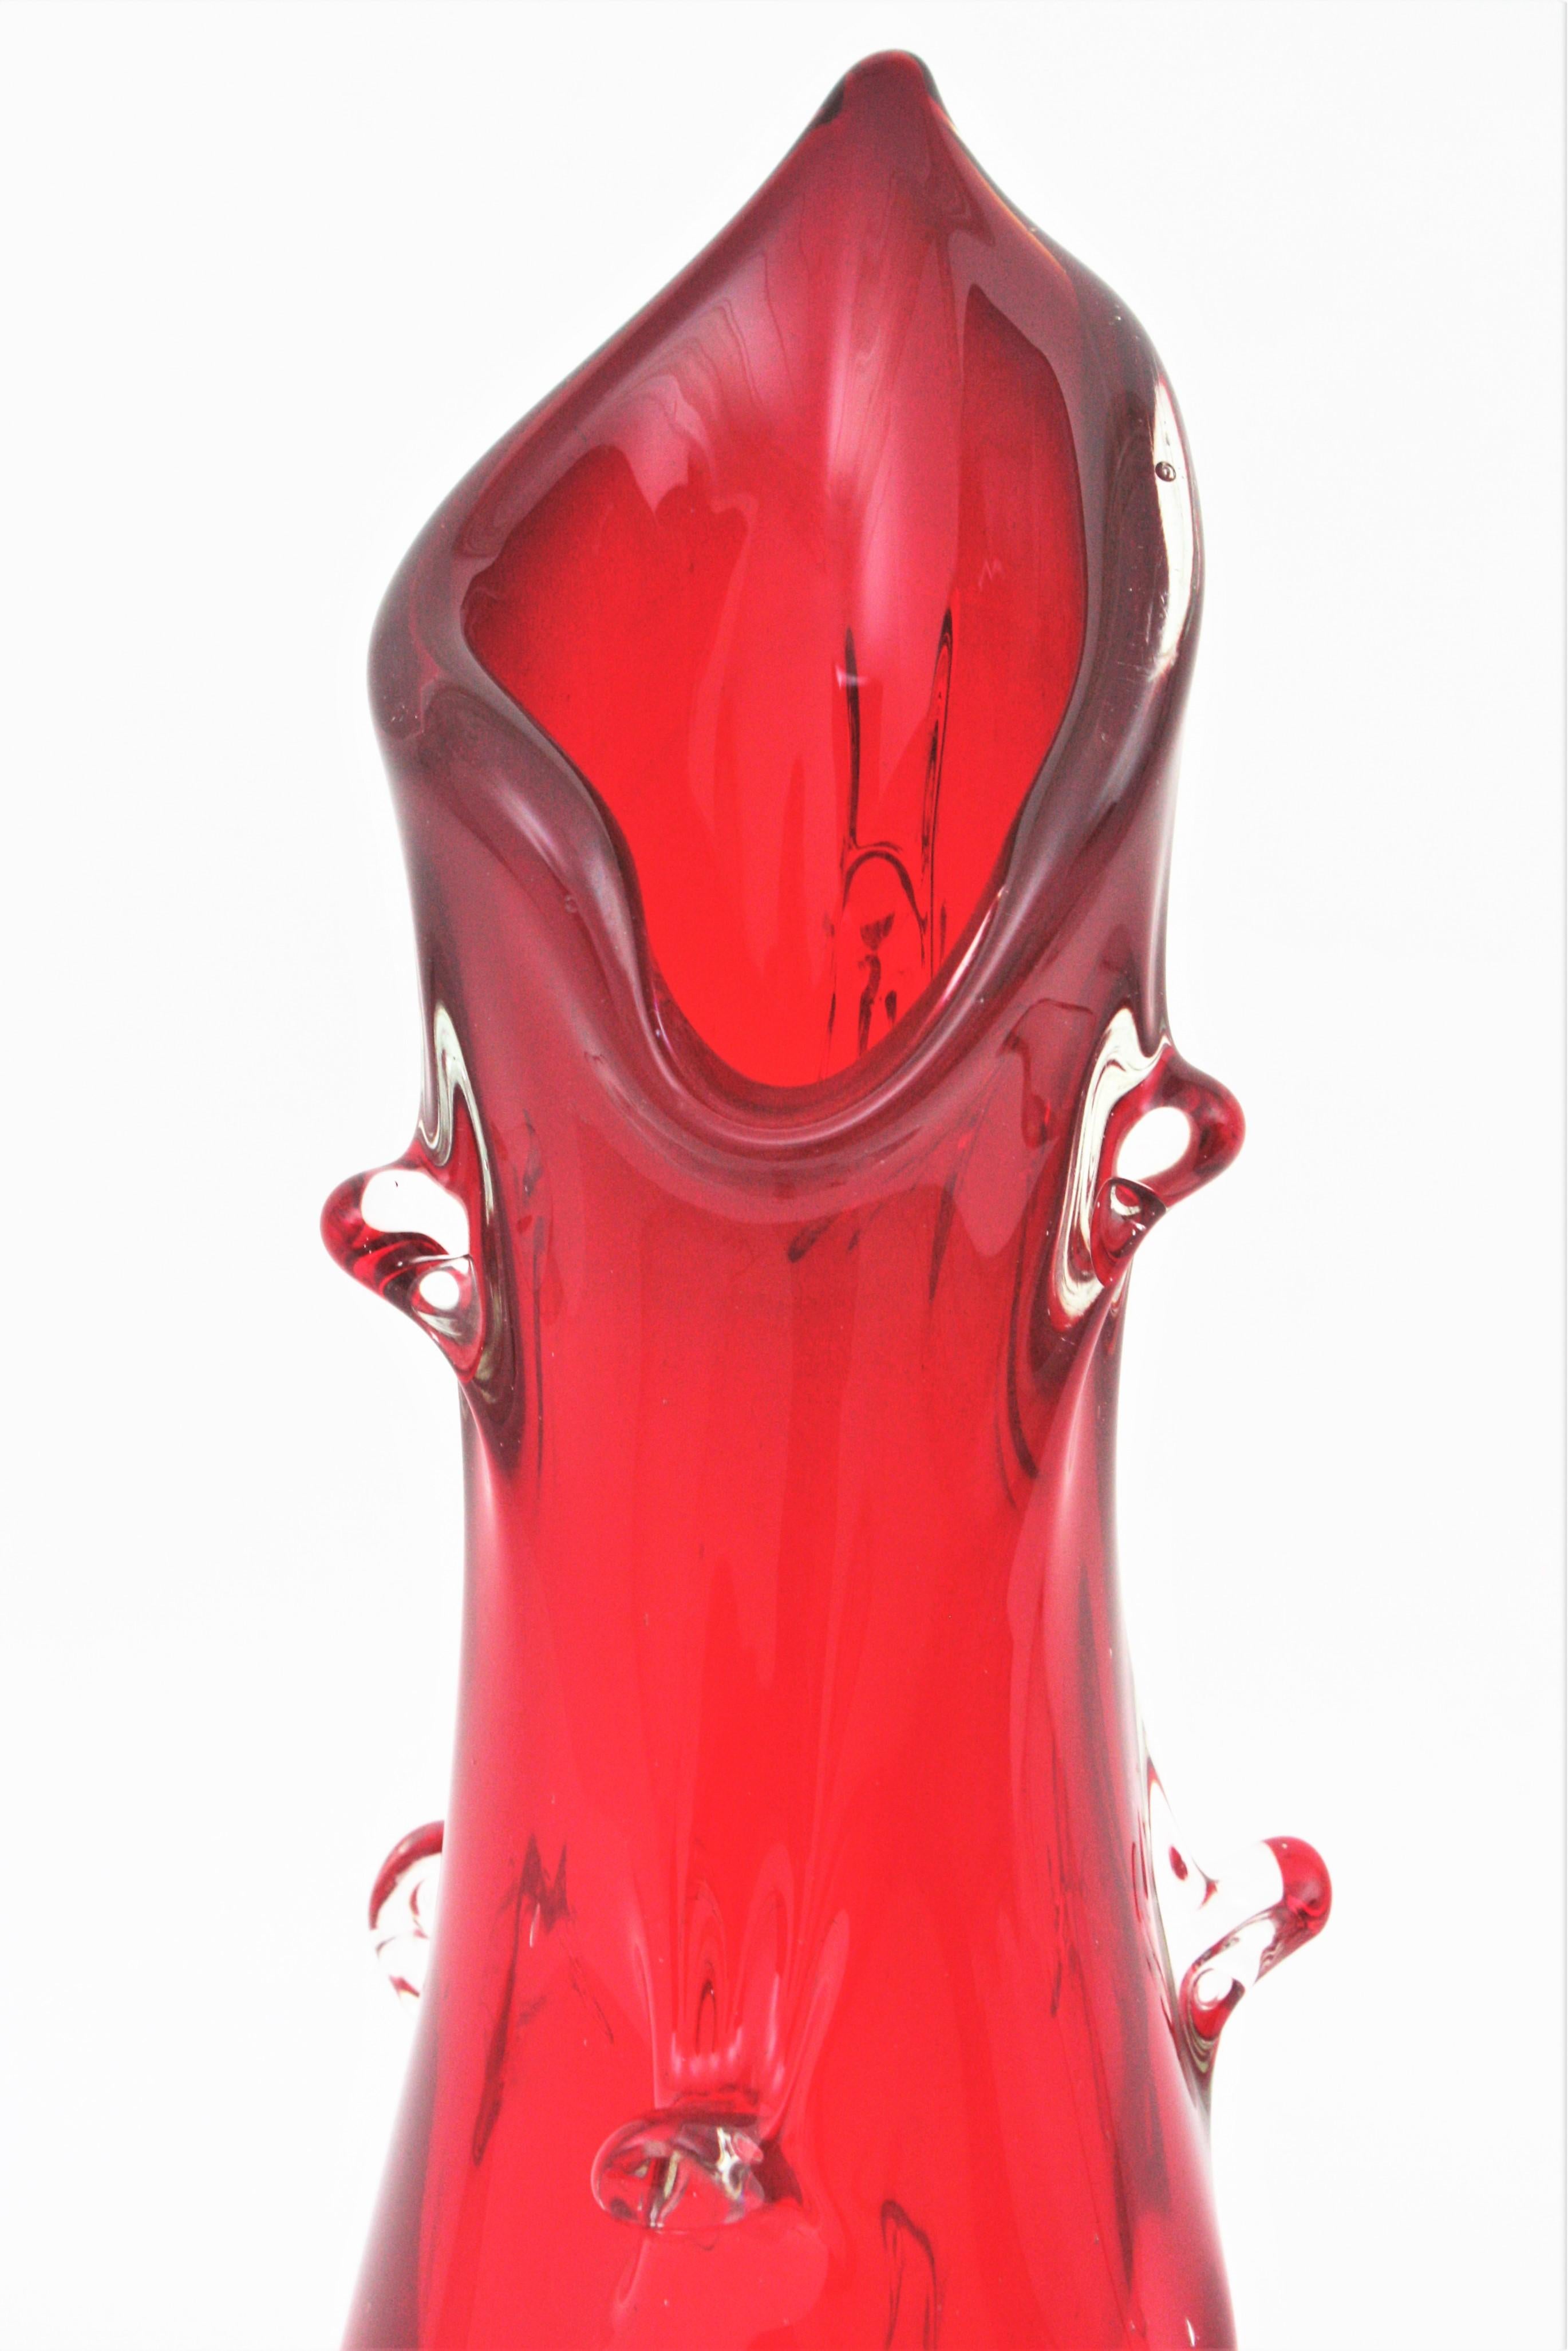 Archimede Seguso Murano Sommerso Red Iridiscent Art Glass Vase, 1960s For Sale 1